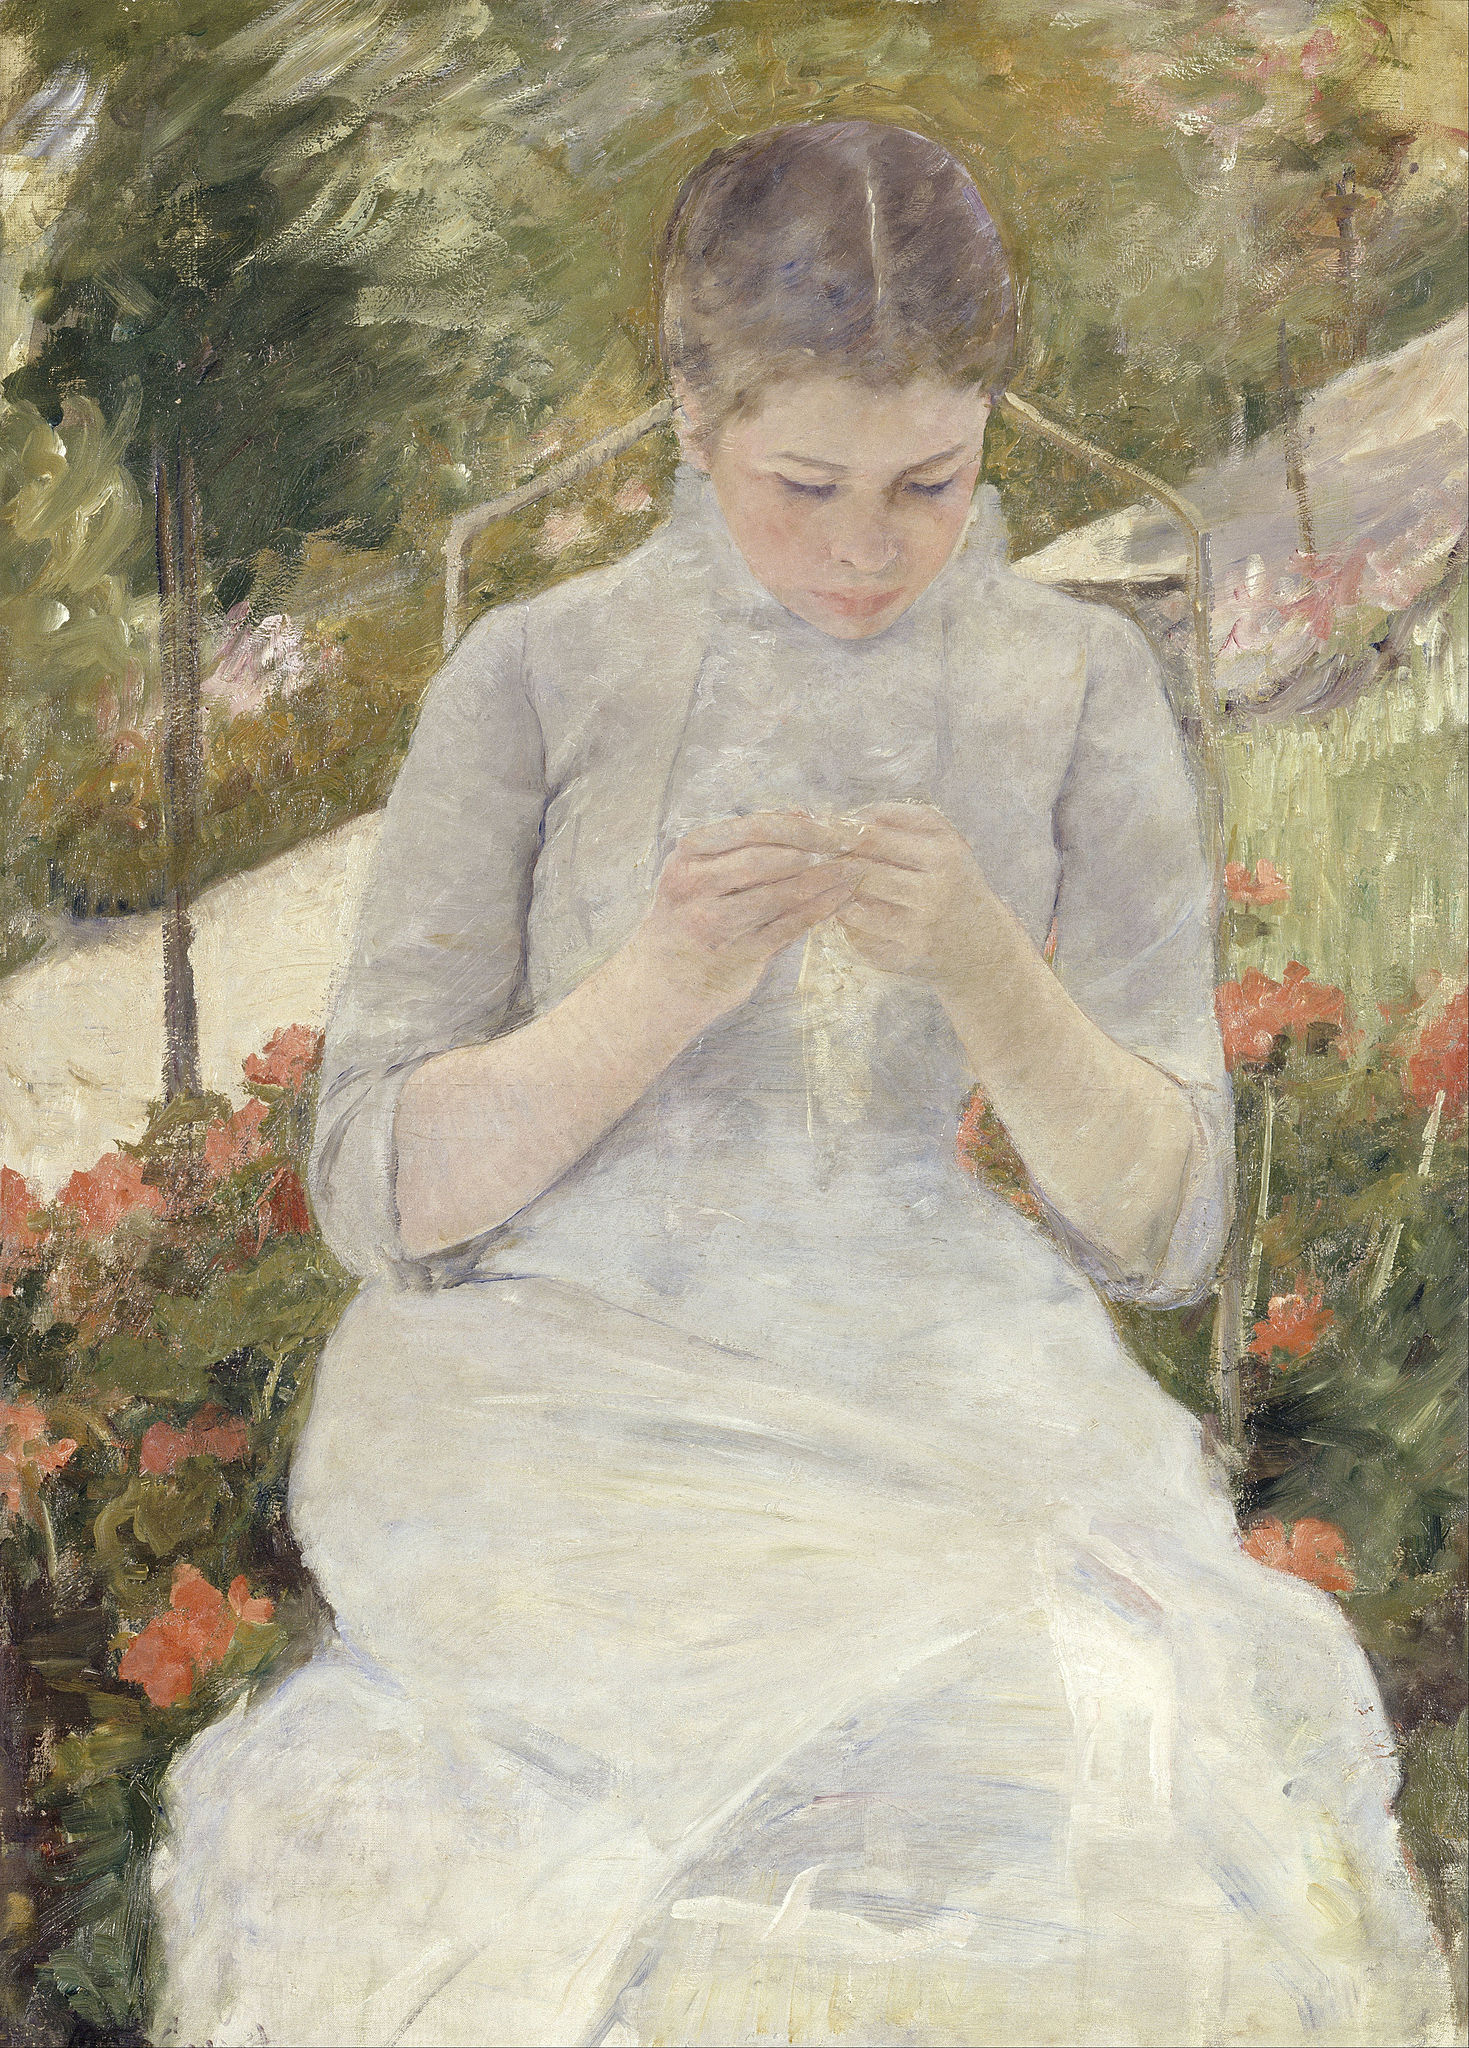 Bahçedeki Kız (orig. "Girl in the Garden") by Mary Cassatt - 1880-1882 - 65 x 92 cm Musée d'Orsay